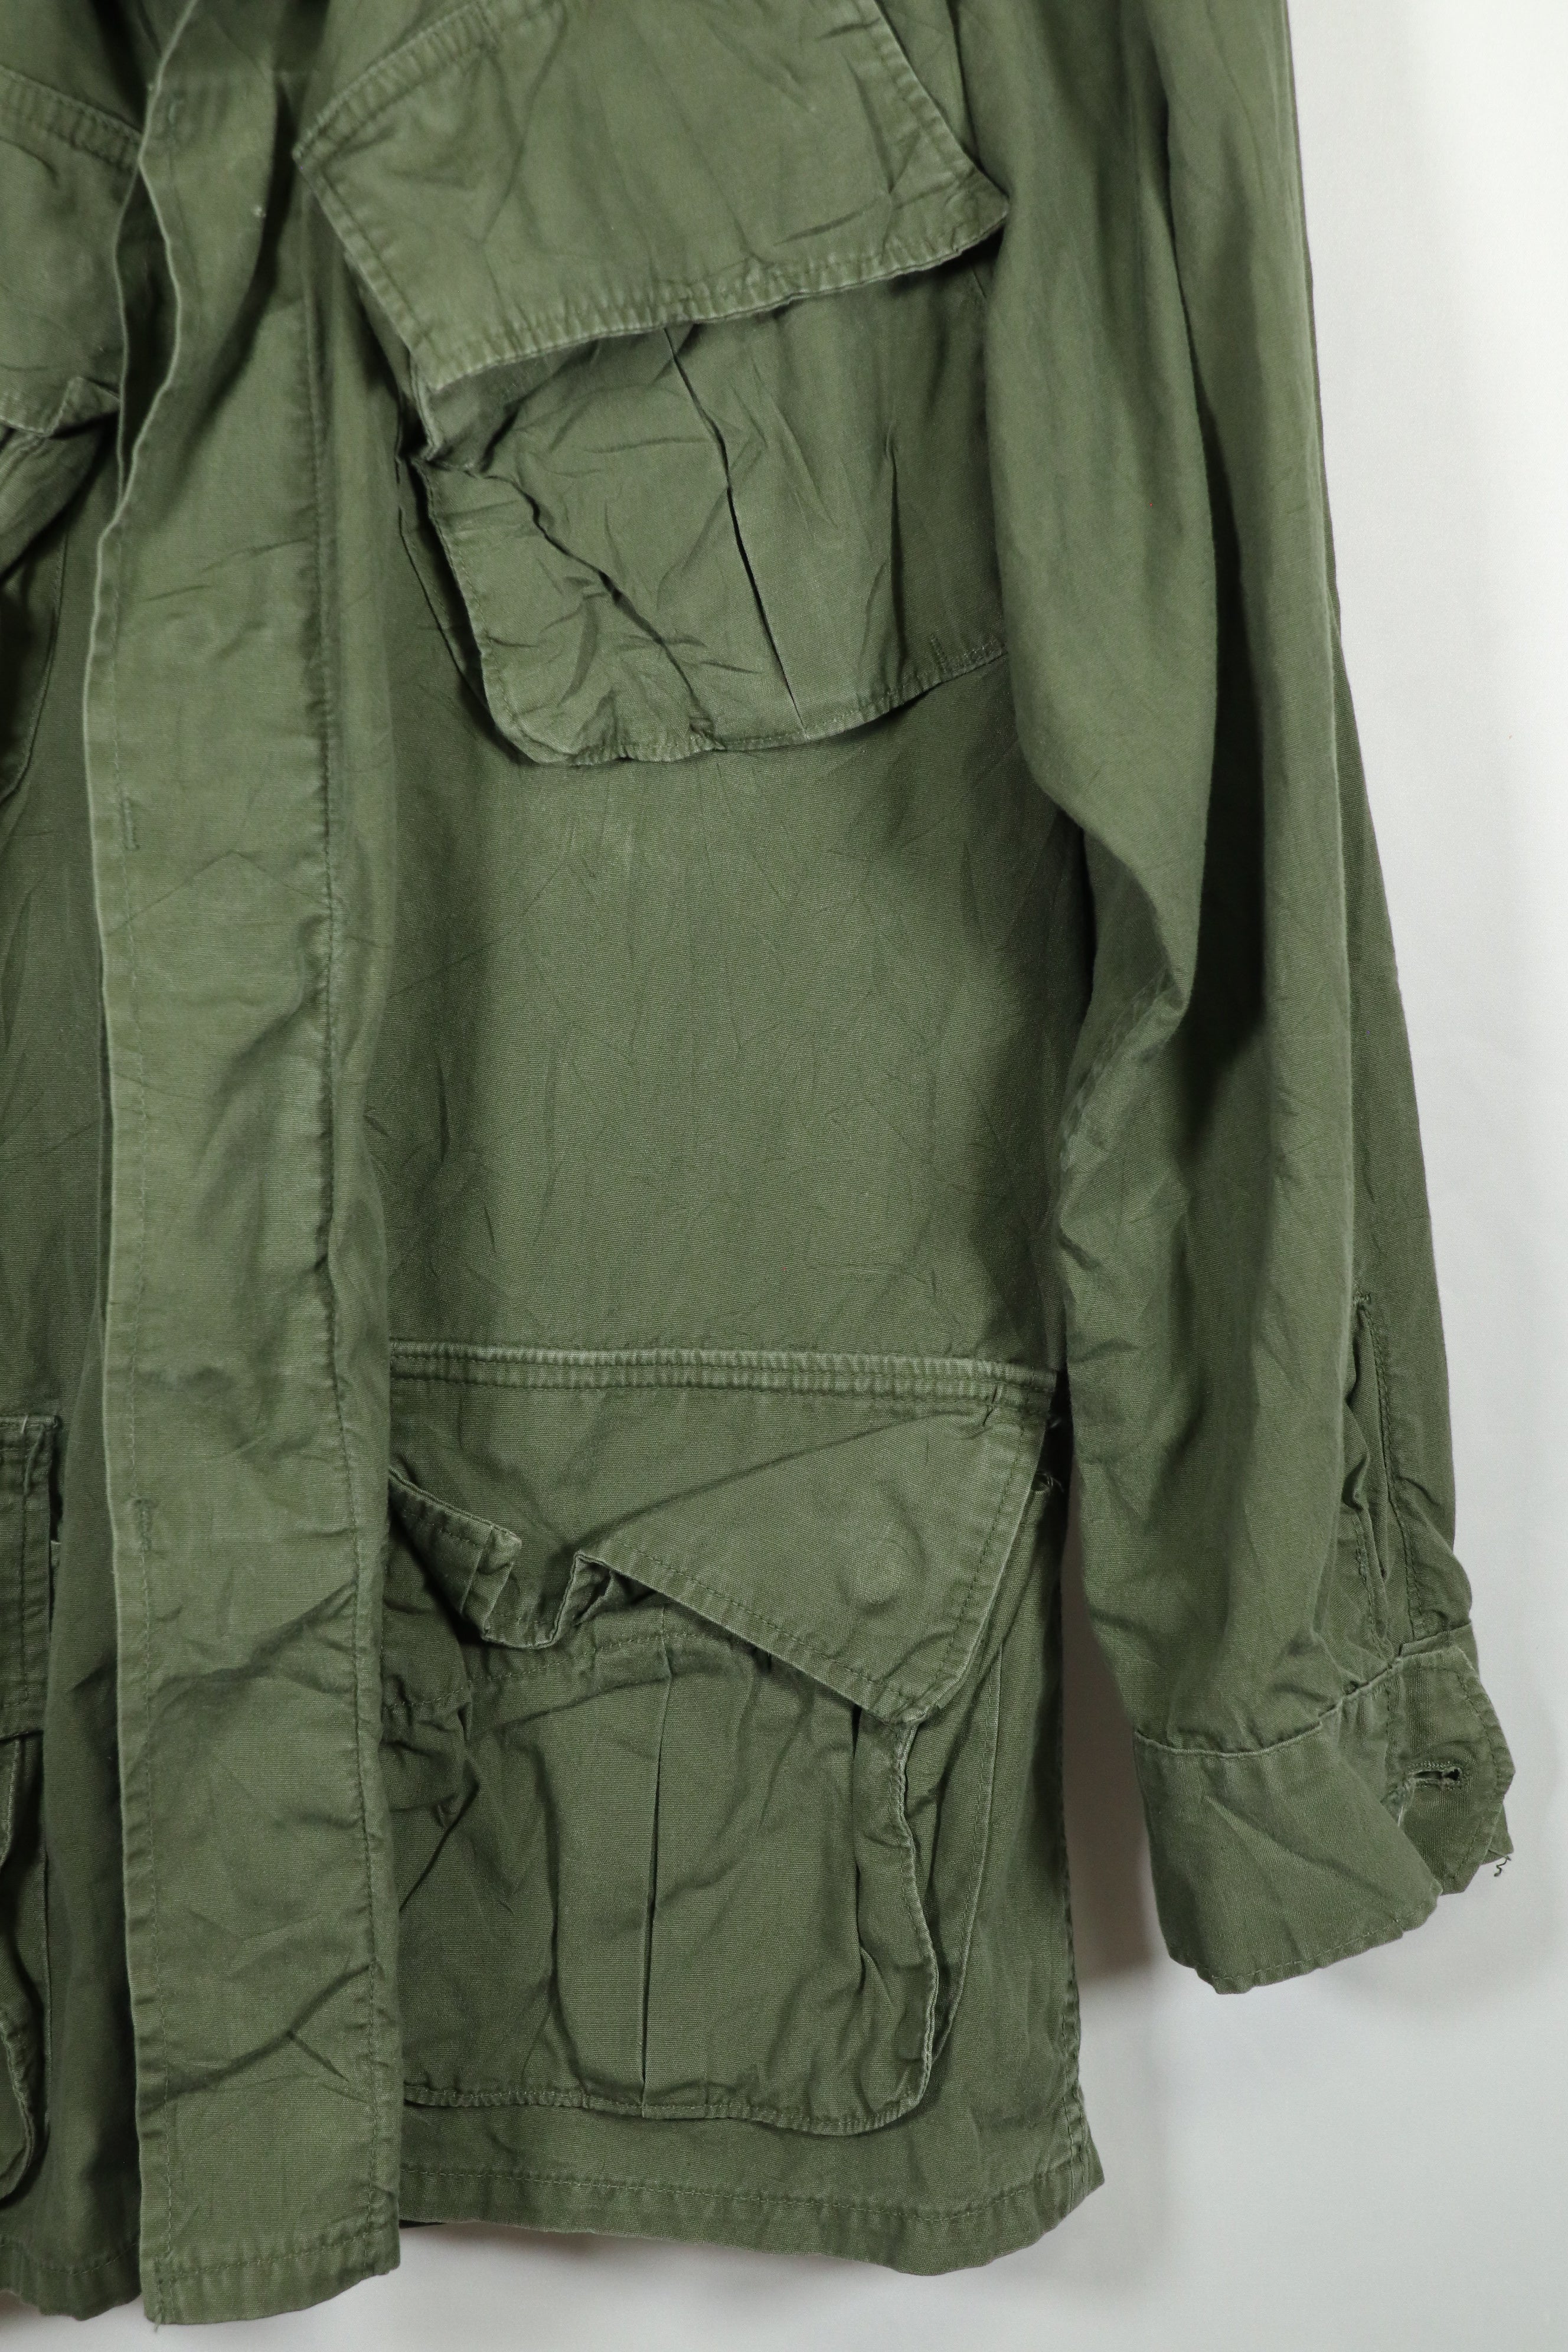 Real 2nd Model Jungle Fatigue Jacket SHORT-MEDIUM Used